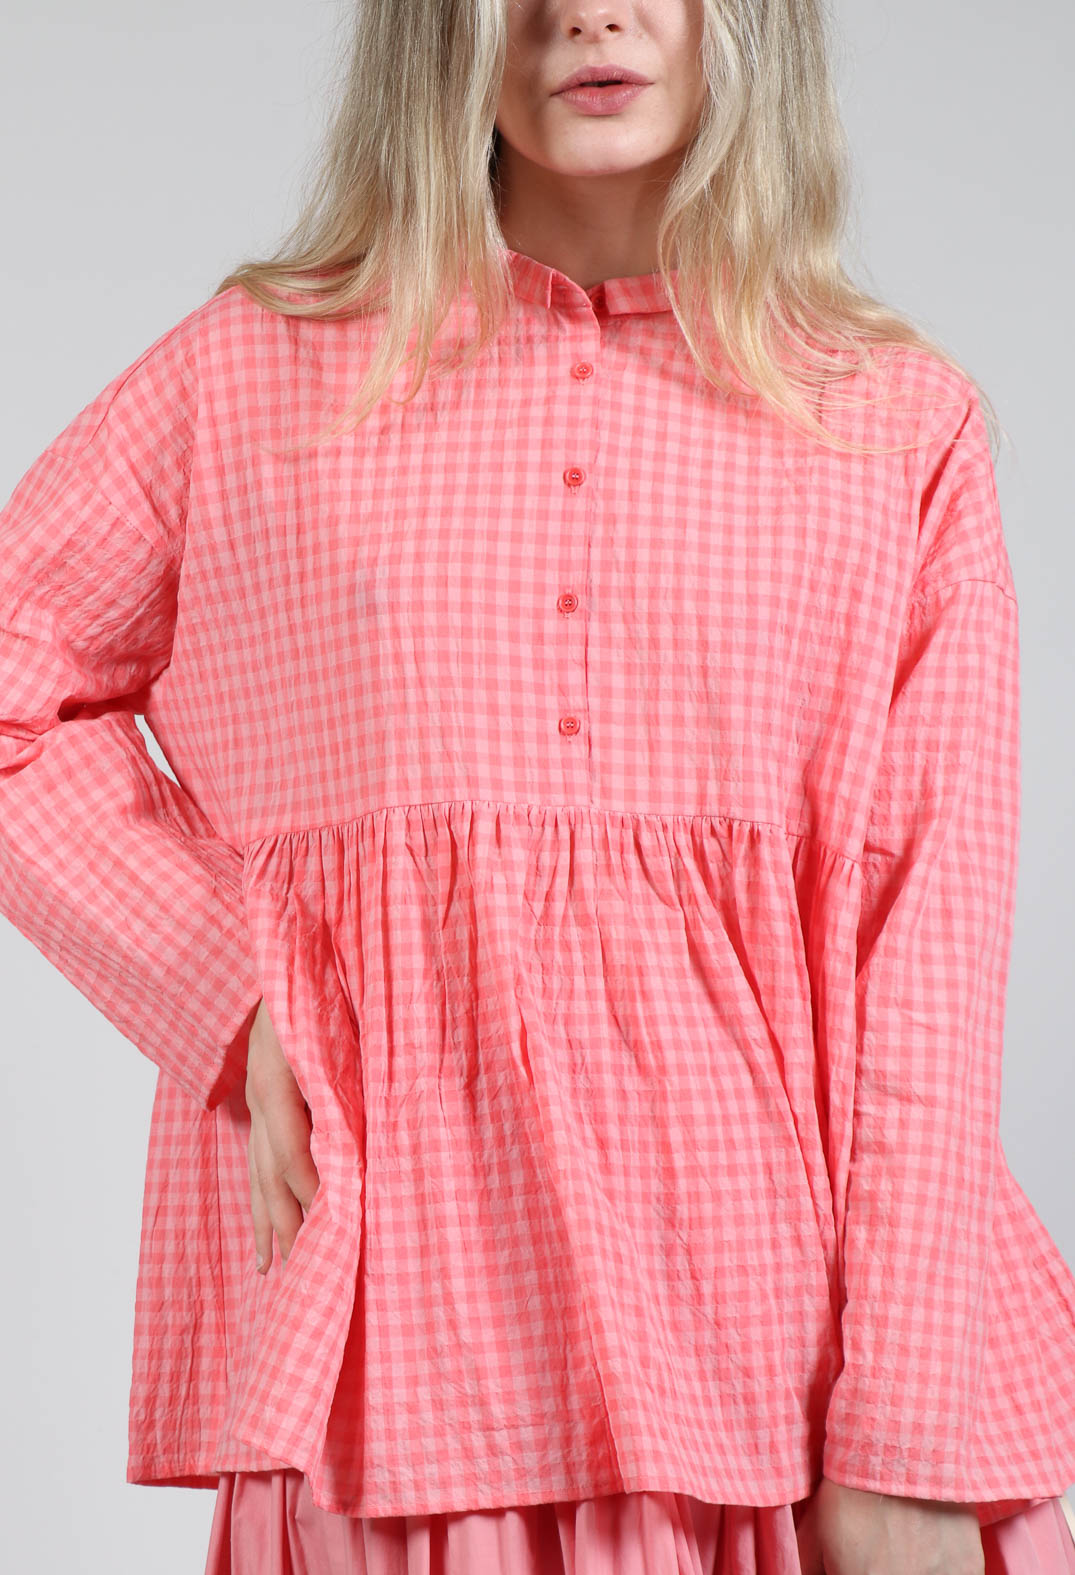 Gingham Shirt in Strawberry